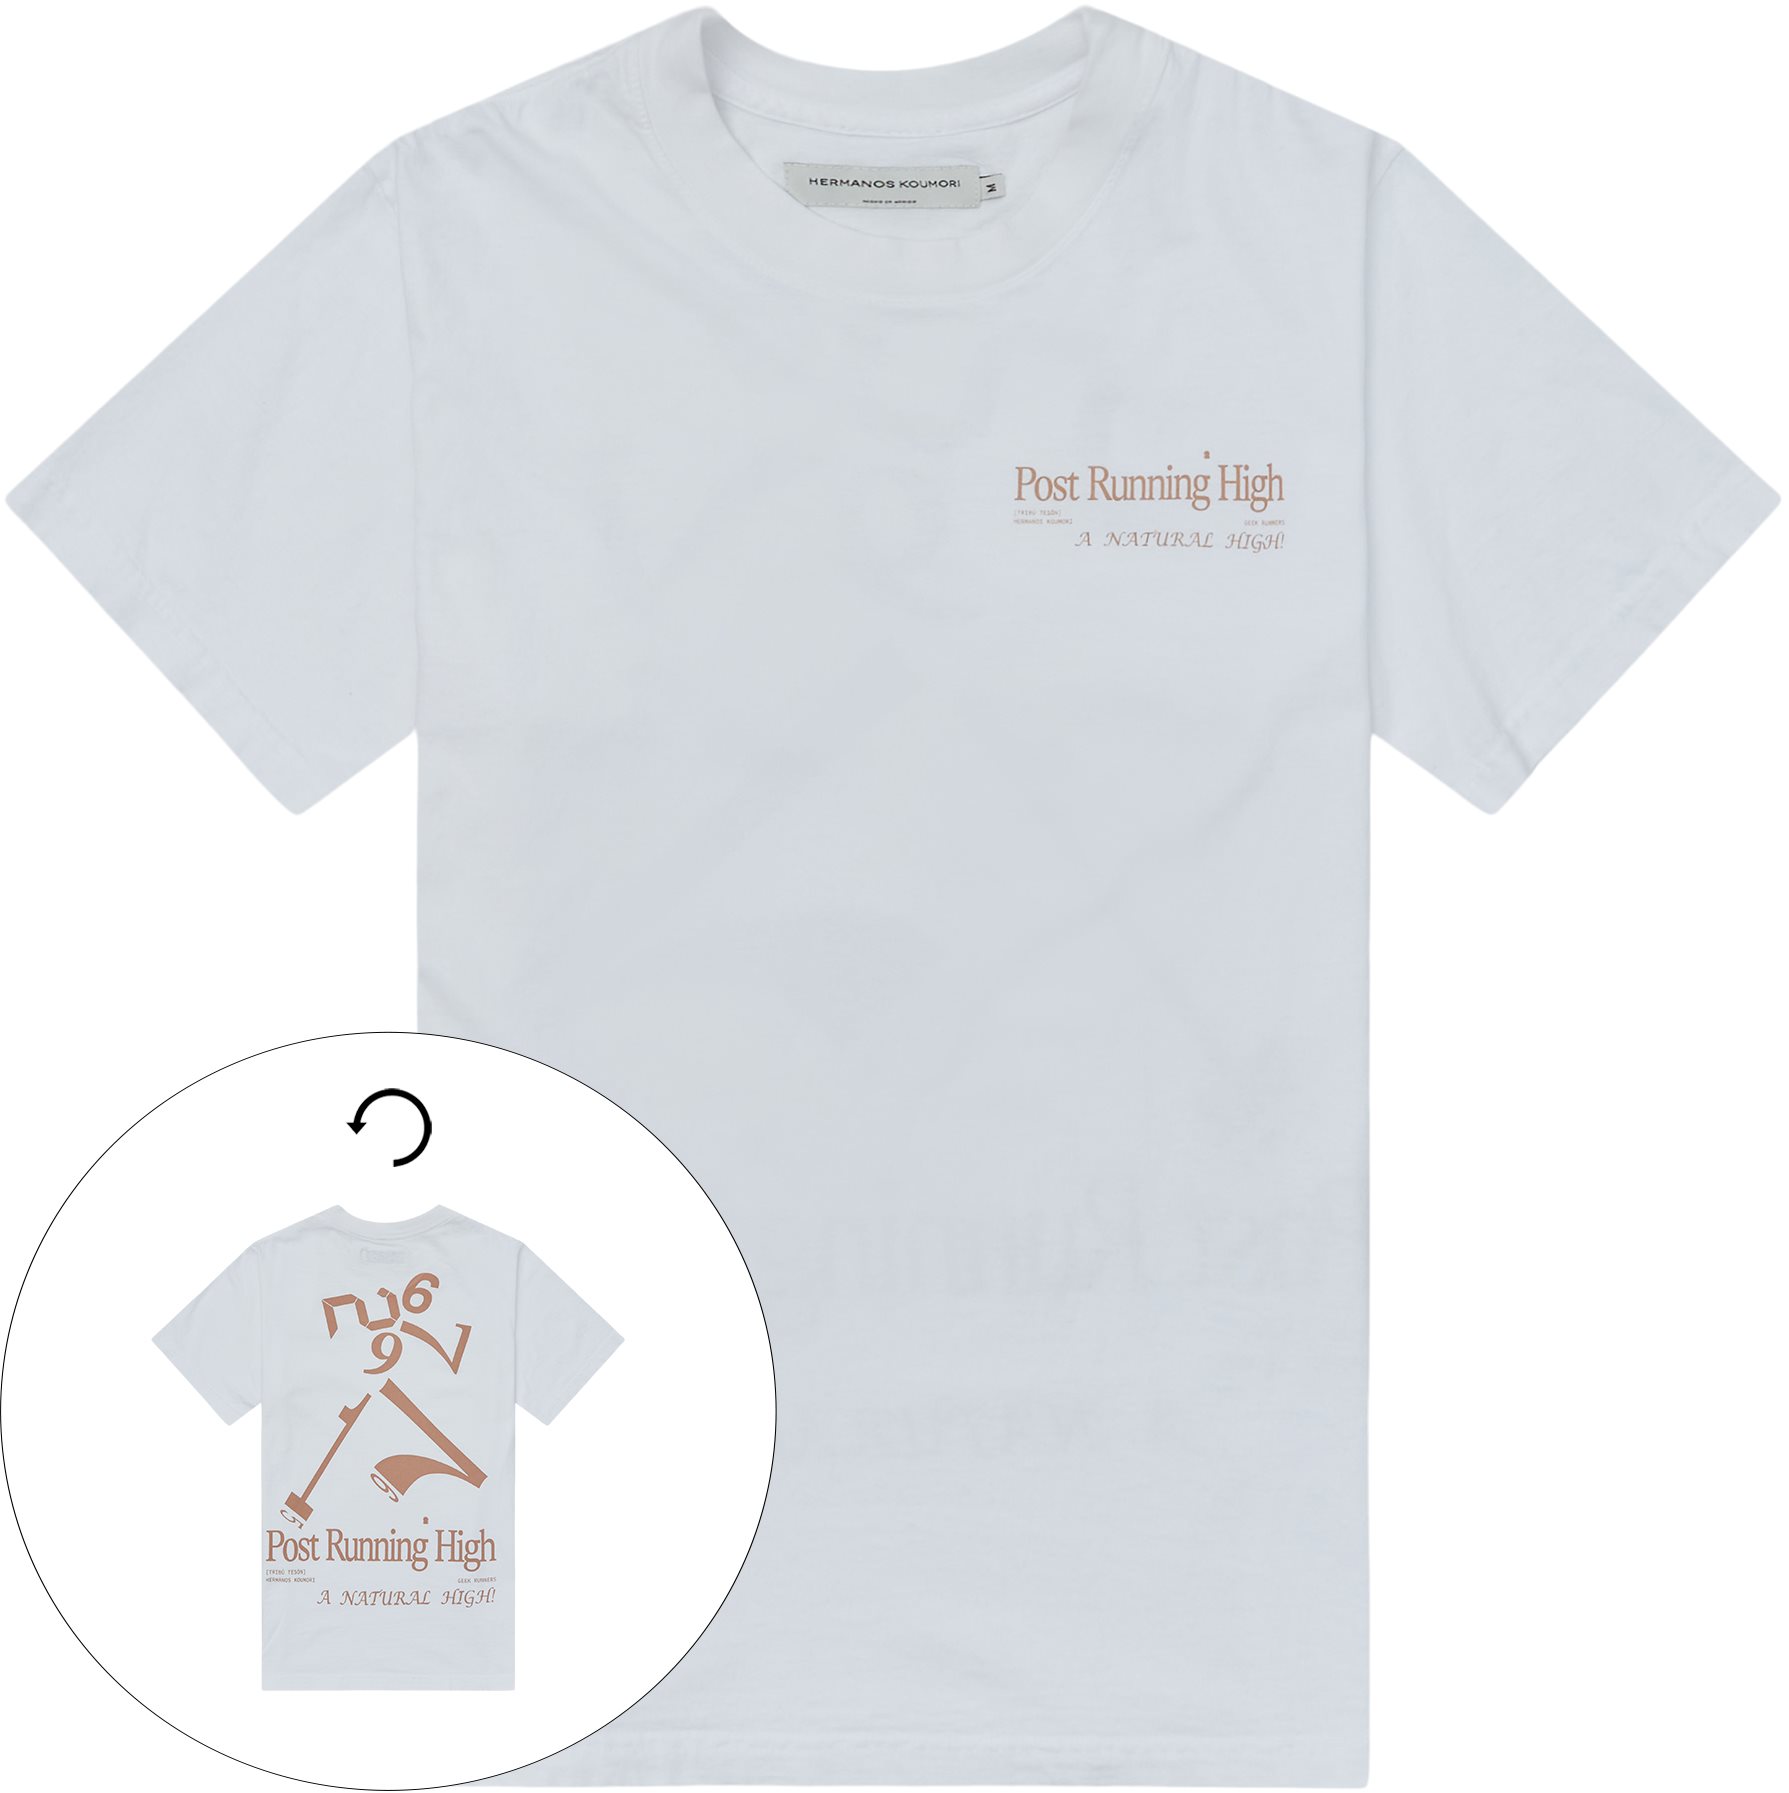 Post Running Tee - T-shirts - Regular fit - Vit